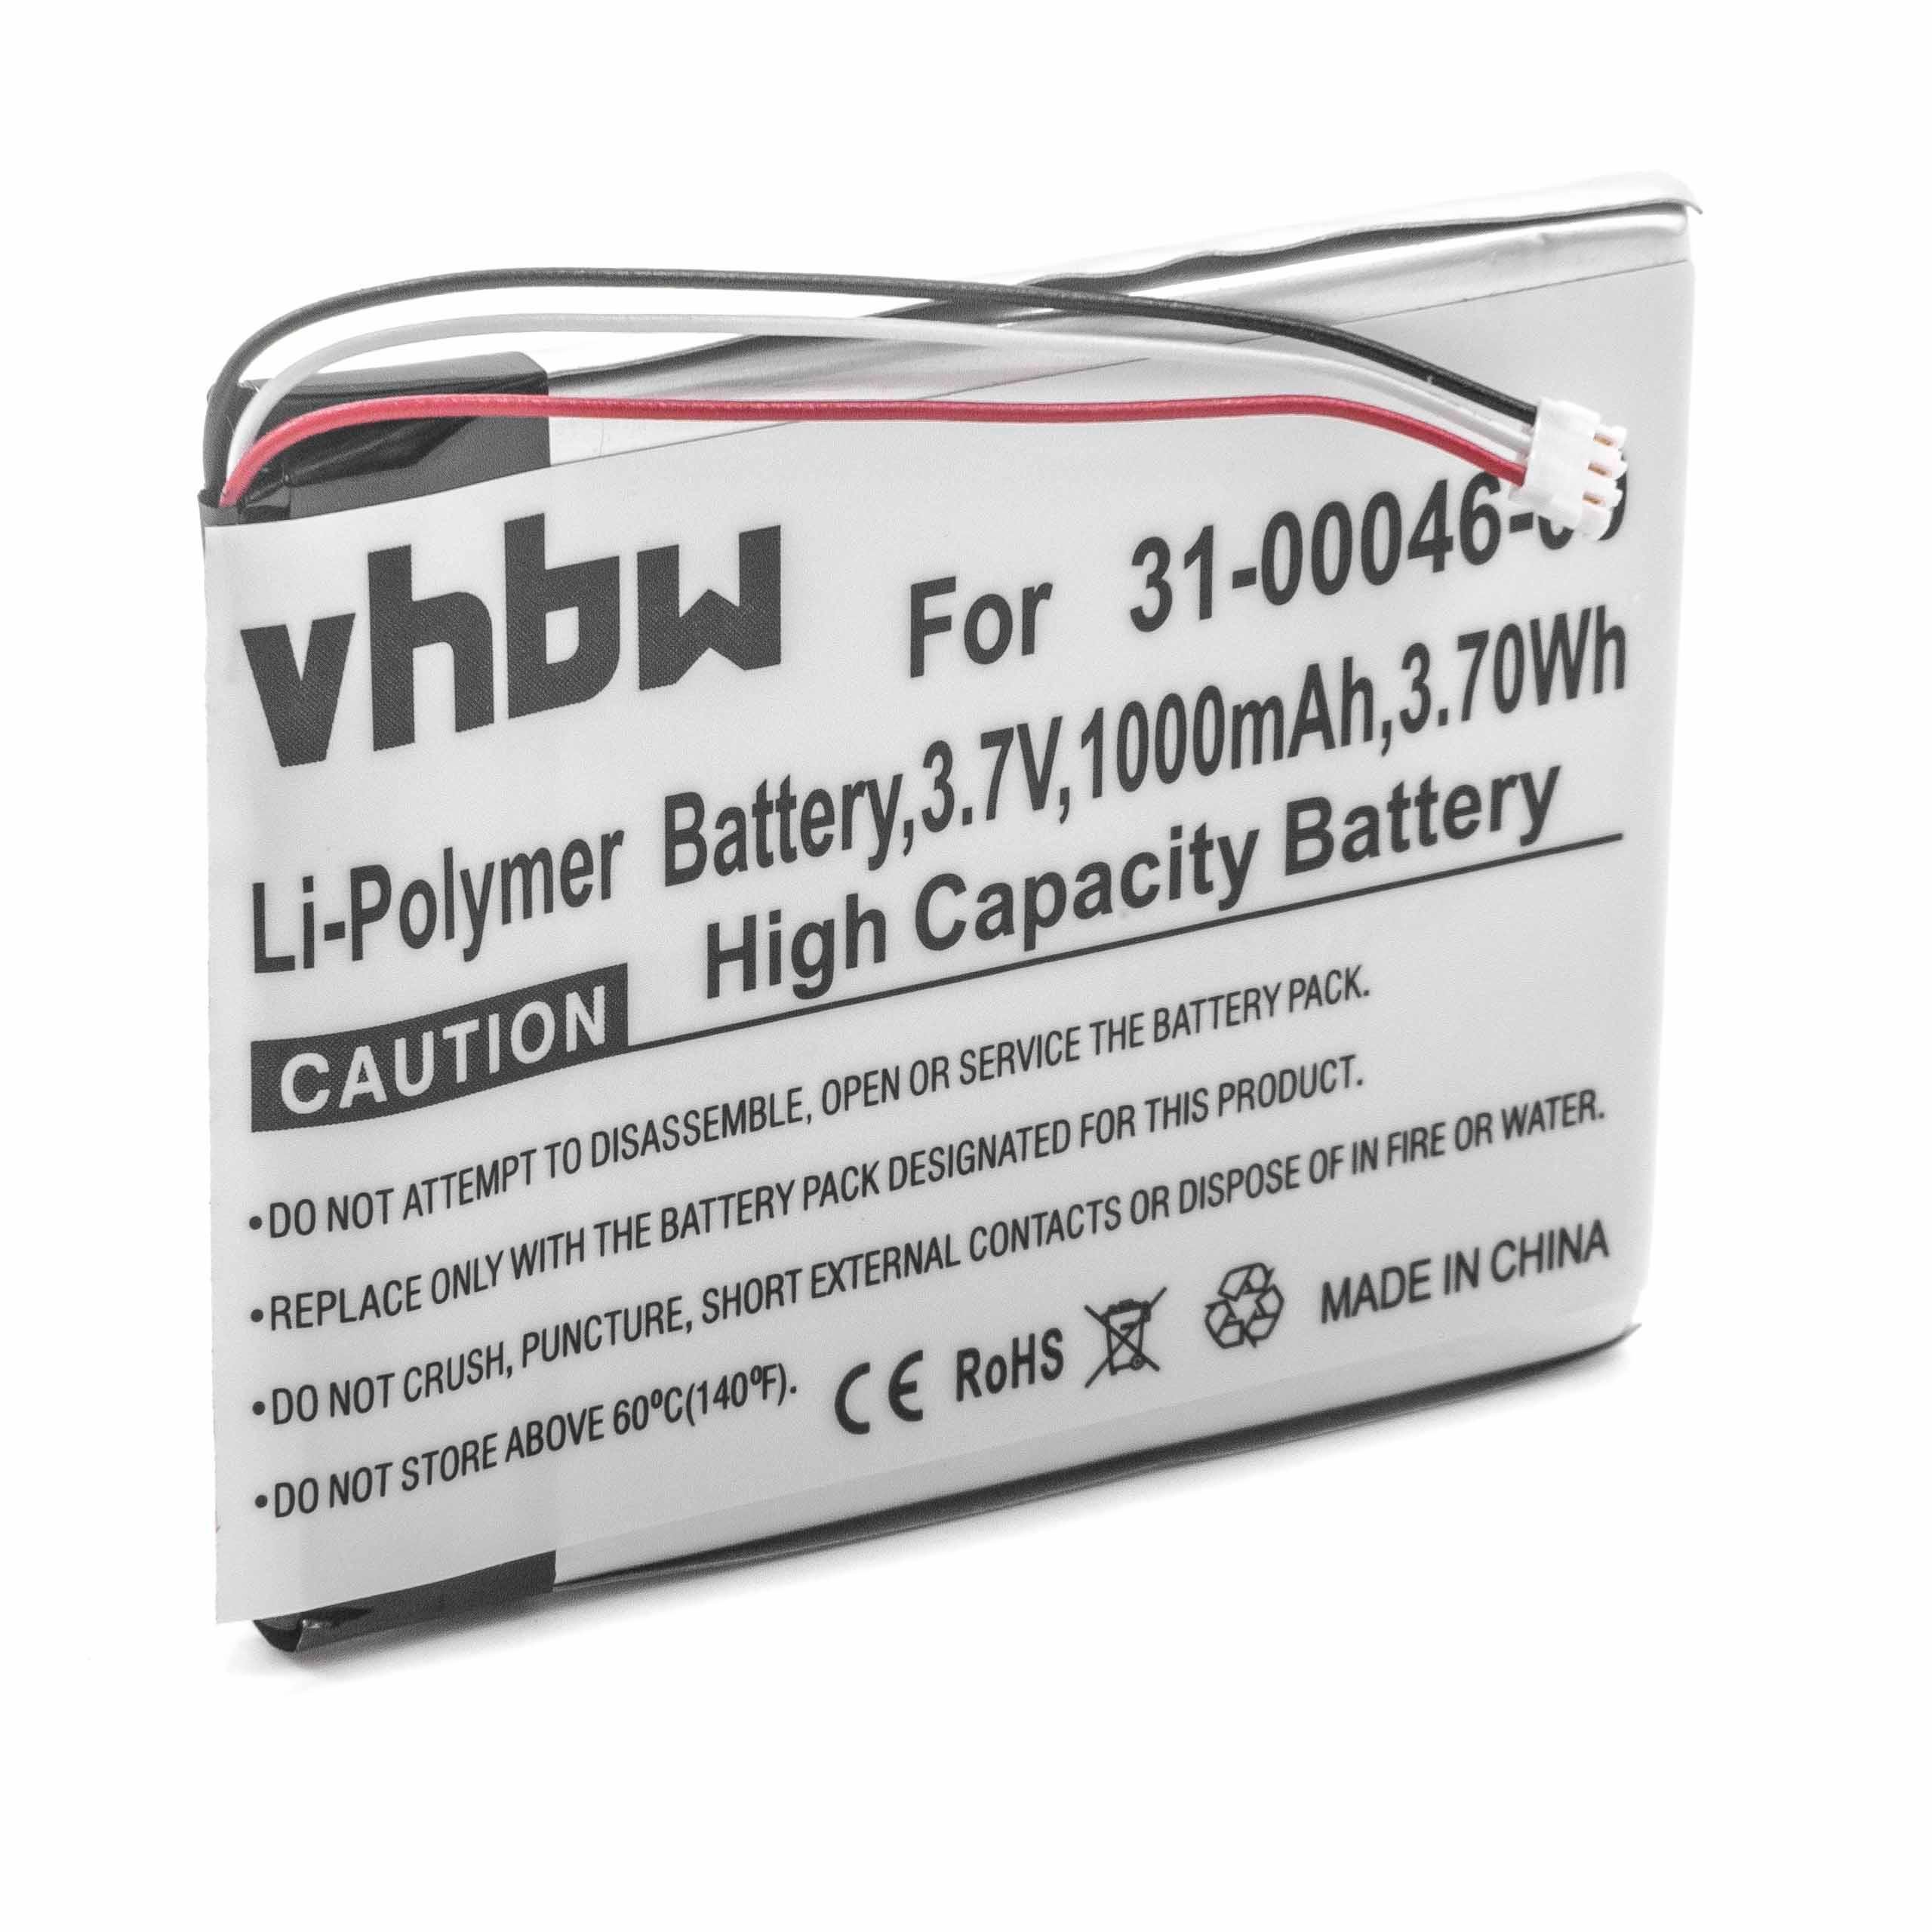 mit (3,7 20 1000 Garmin mAh Li-Polymer Akku Dash V) Cam kompatibel vhbw